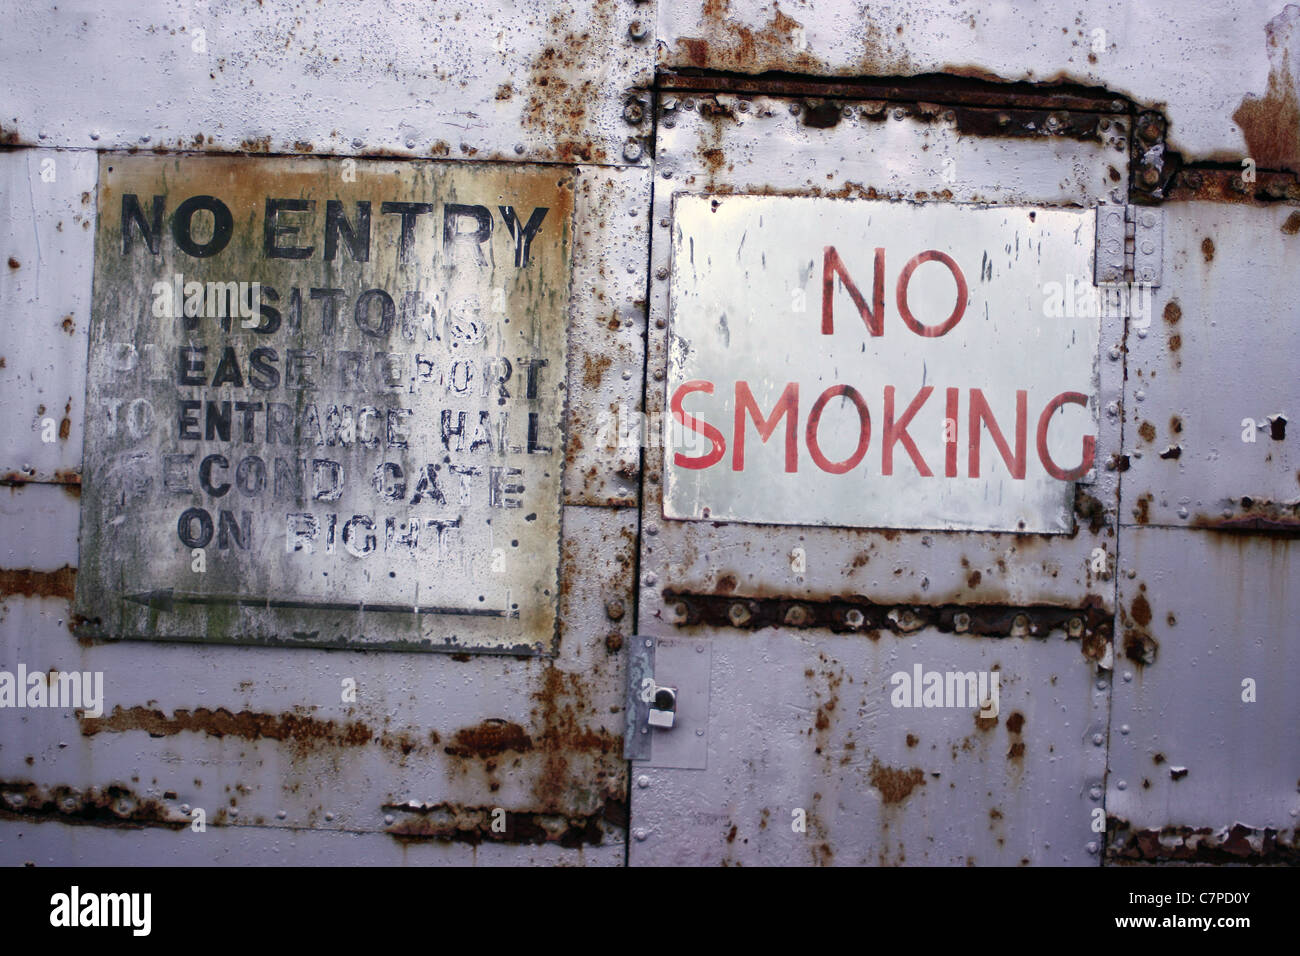 rusty old metal doors with NO SMOKING sign Stock Photo